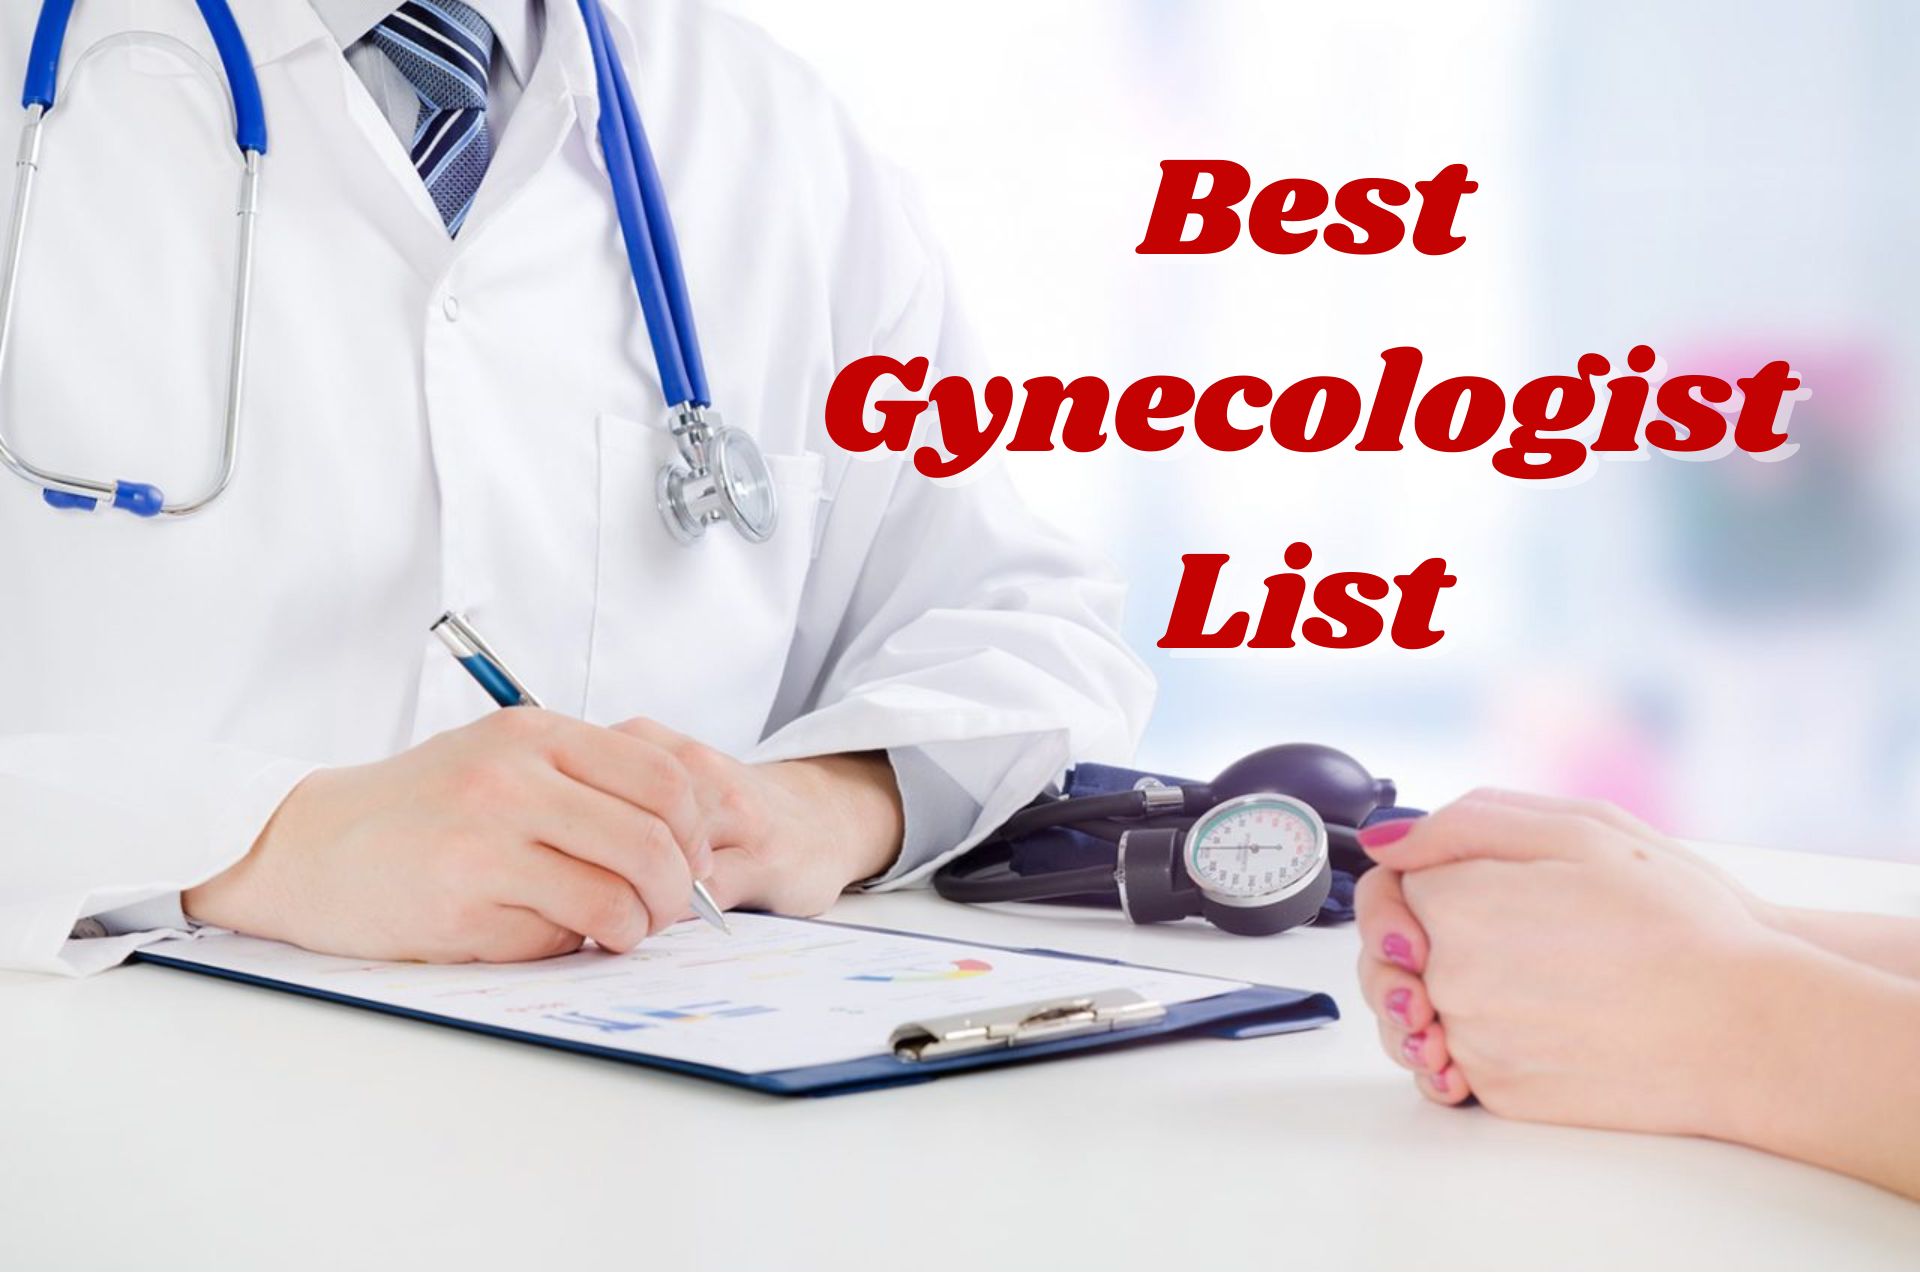 Gynecologist List